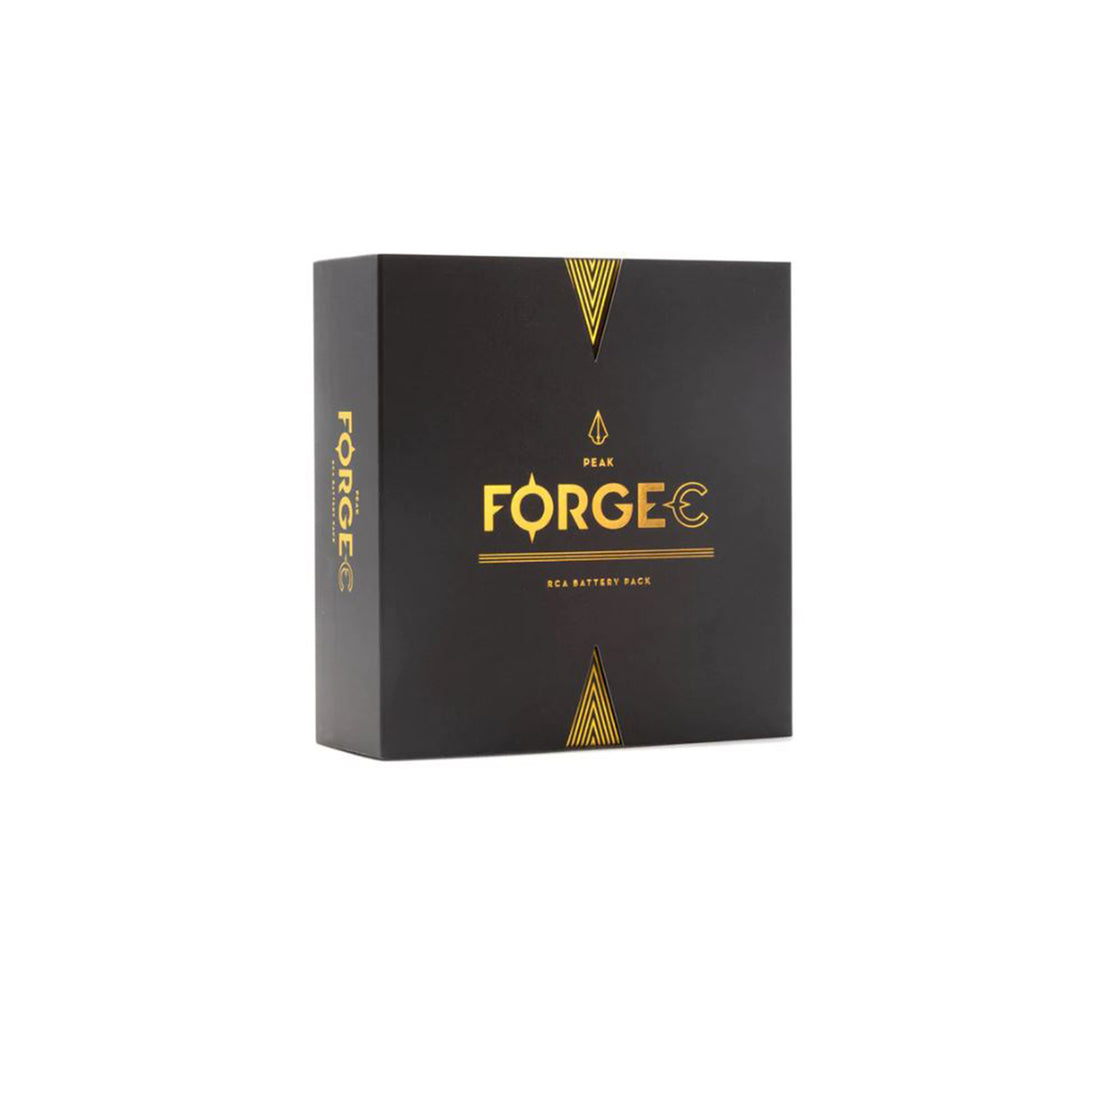 Peak Forge - C Battery Pack - RCA